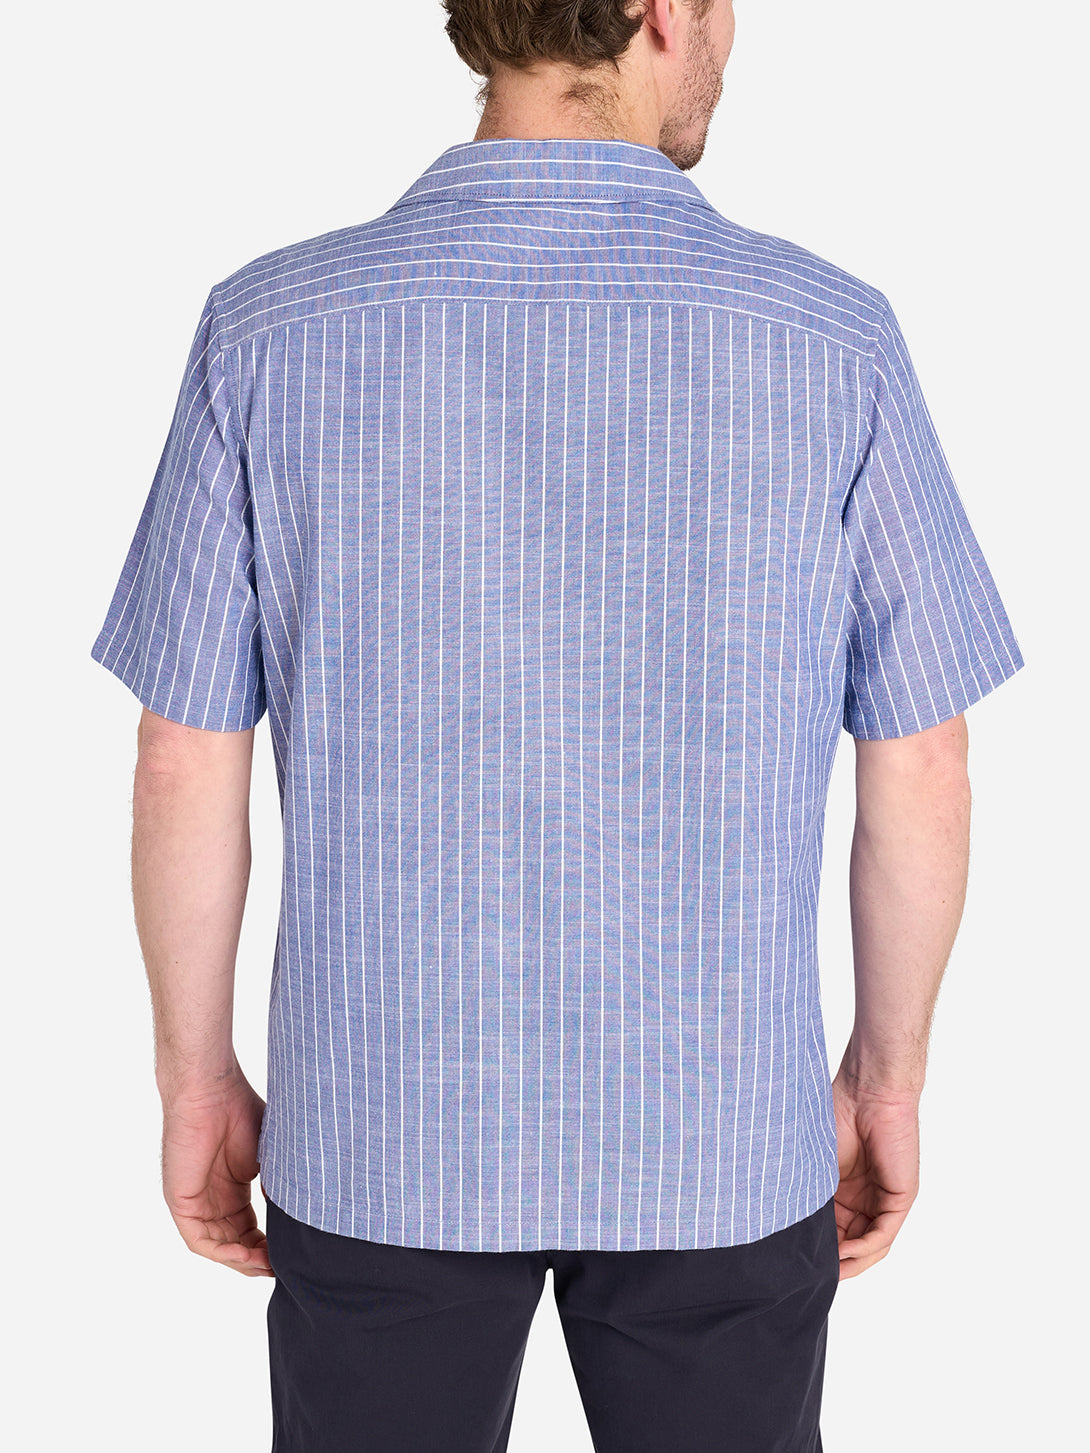 Blue/White Stripe Rockaway Stripe Shirt Mens Camp Collar Summer Button Tee